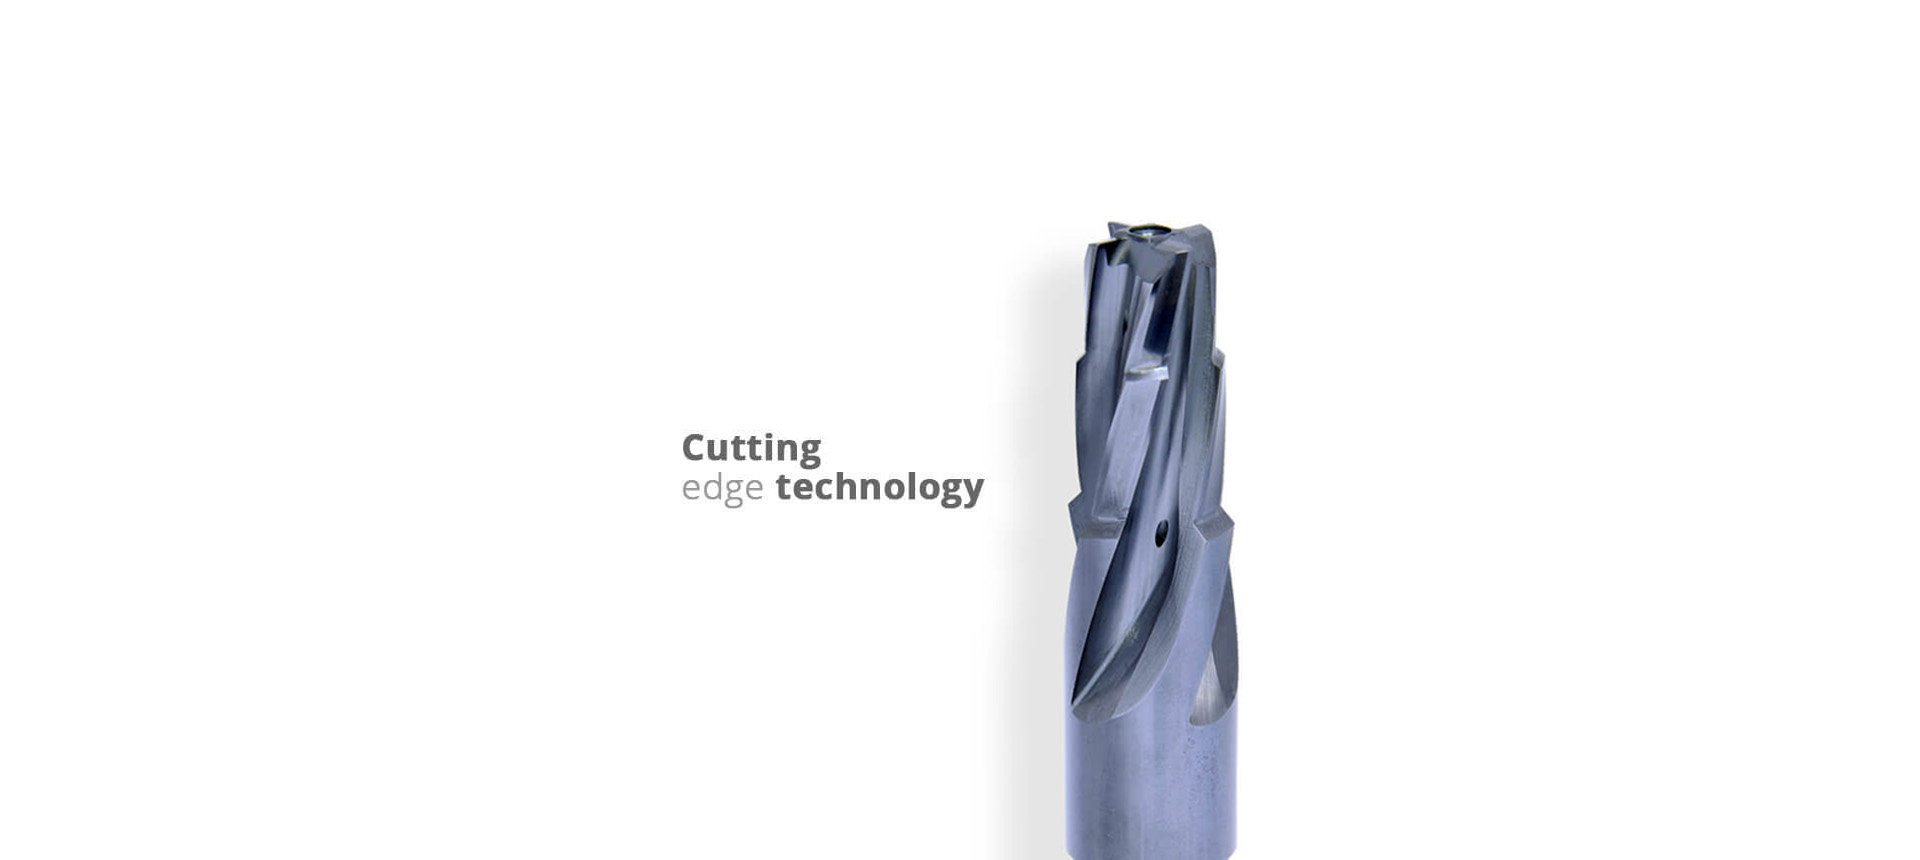 Cutting edge technology